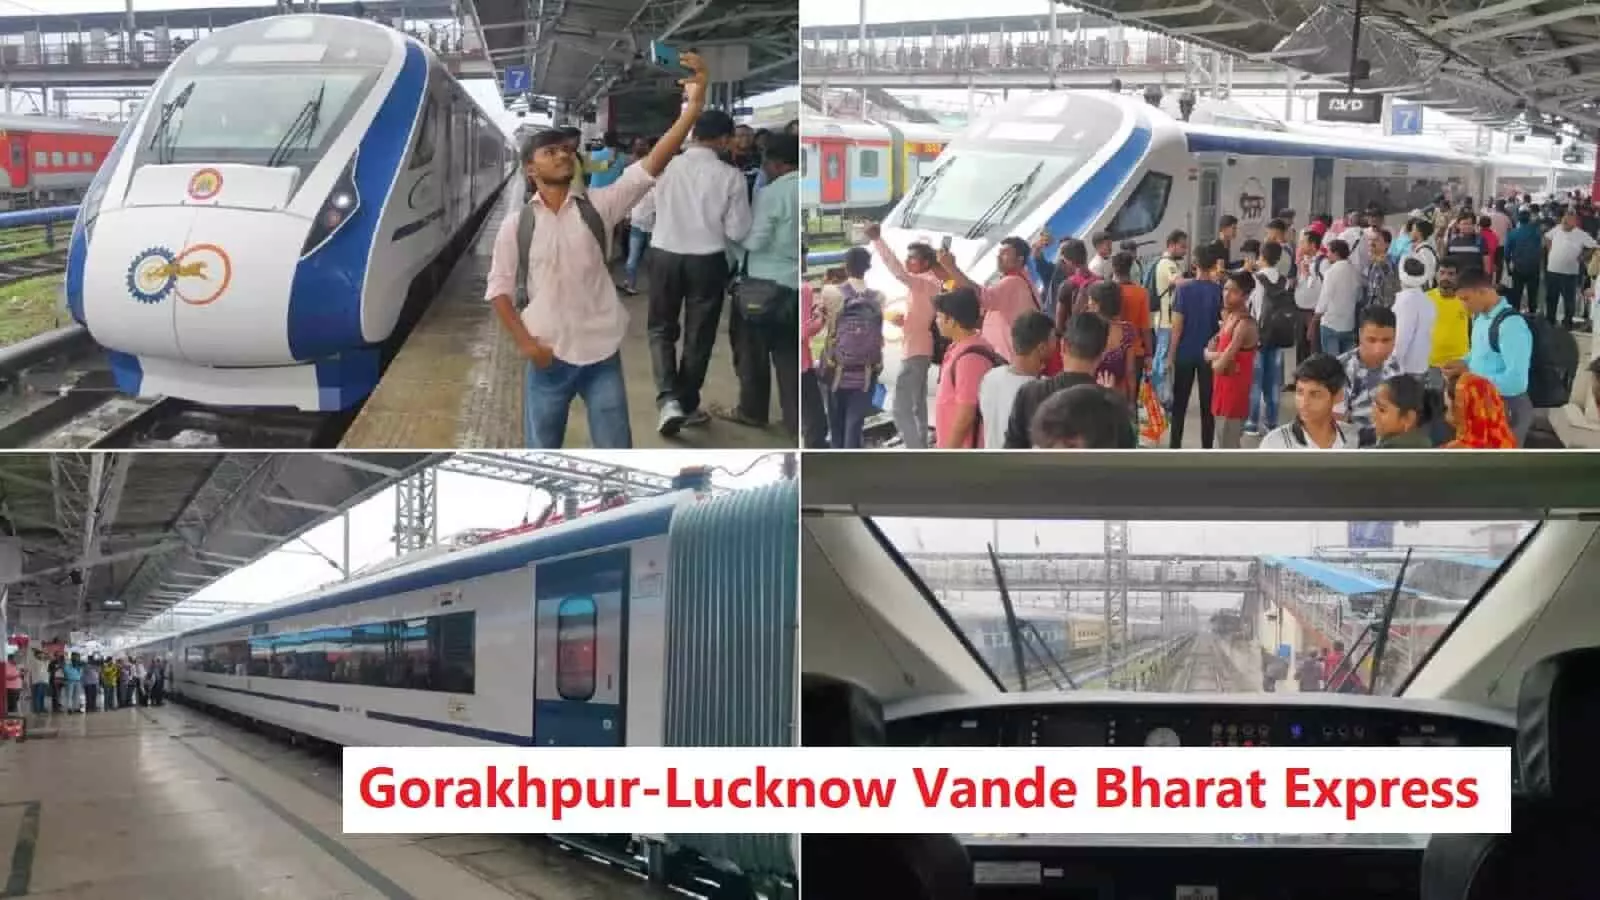 UP को मिली दूसरी वन्दे भारत एक्सप्रेस की सौगात! Gorakhpur-Lucknow Vande Bharat Express को लेकर Update